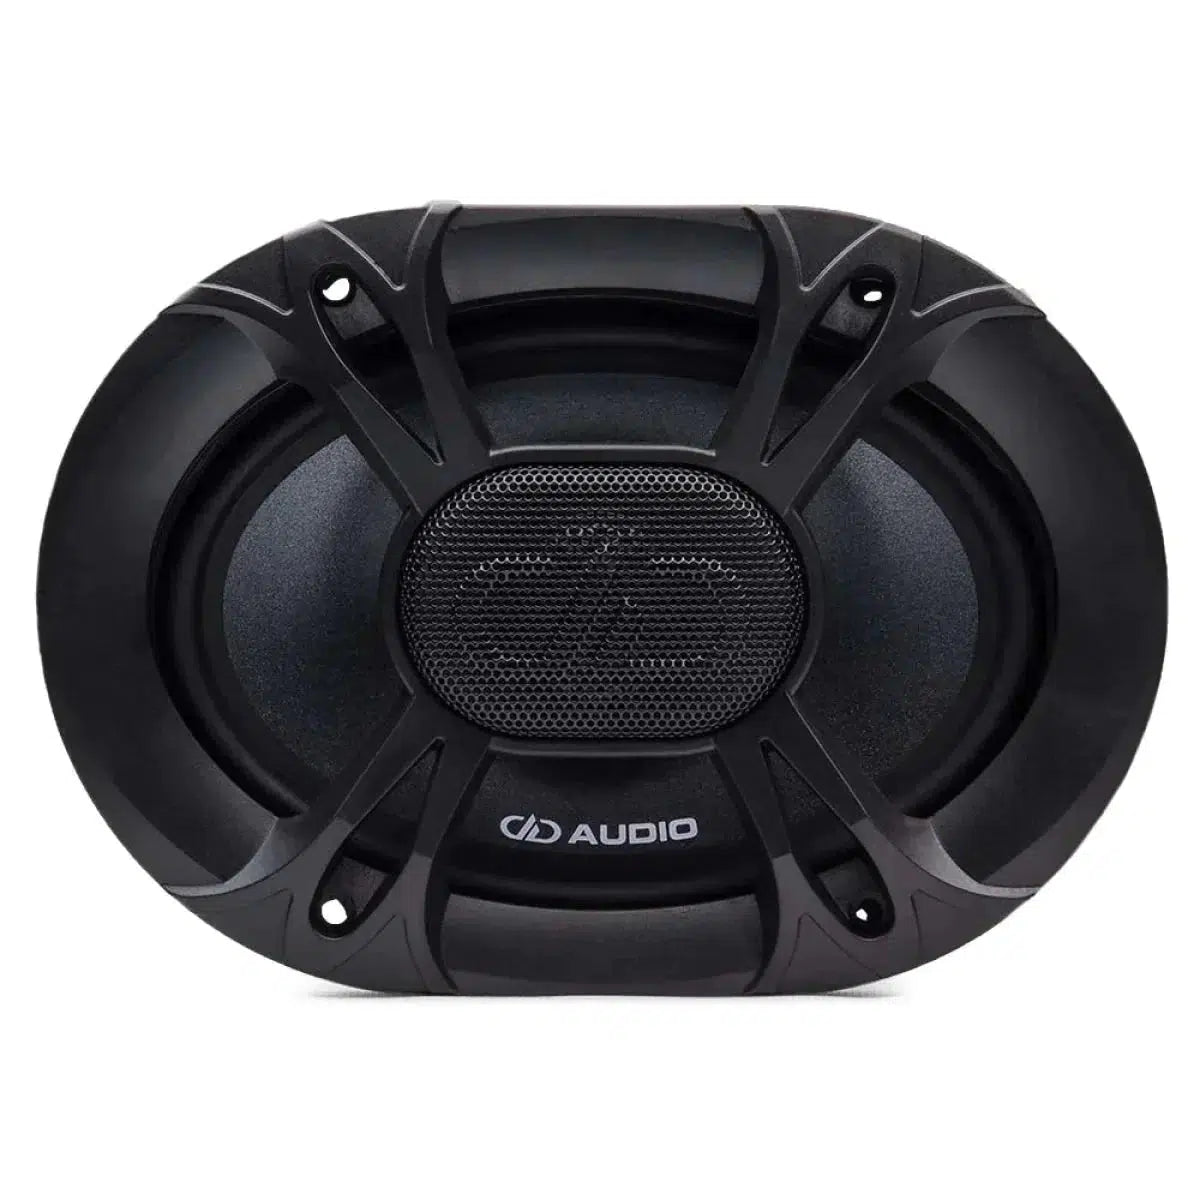 DD Audio-DX5x7-5 "x7" coaxial loudspeaker-Masori.de